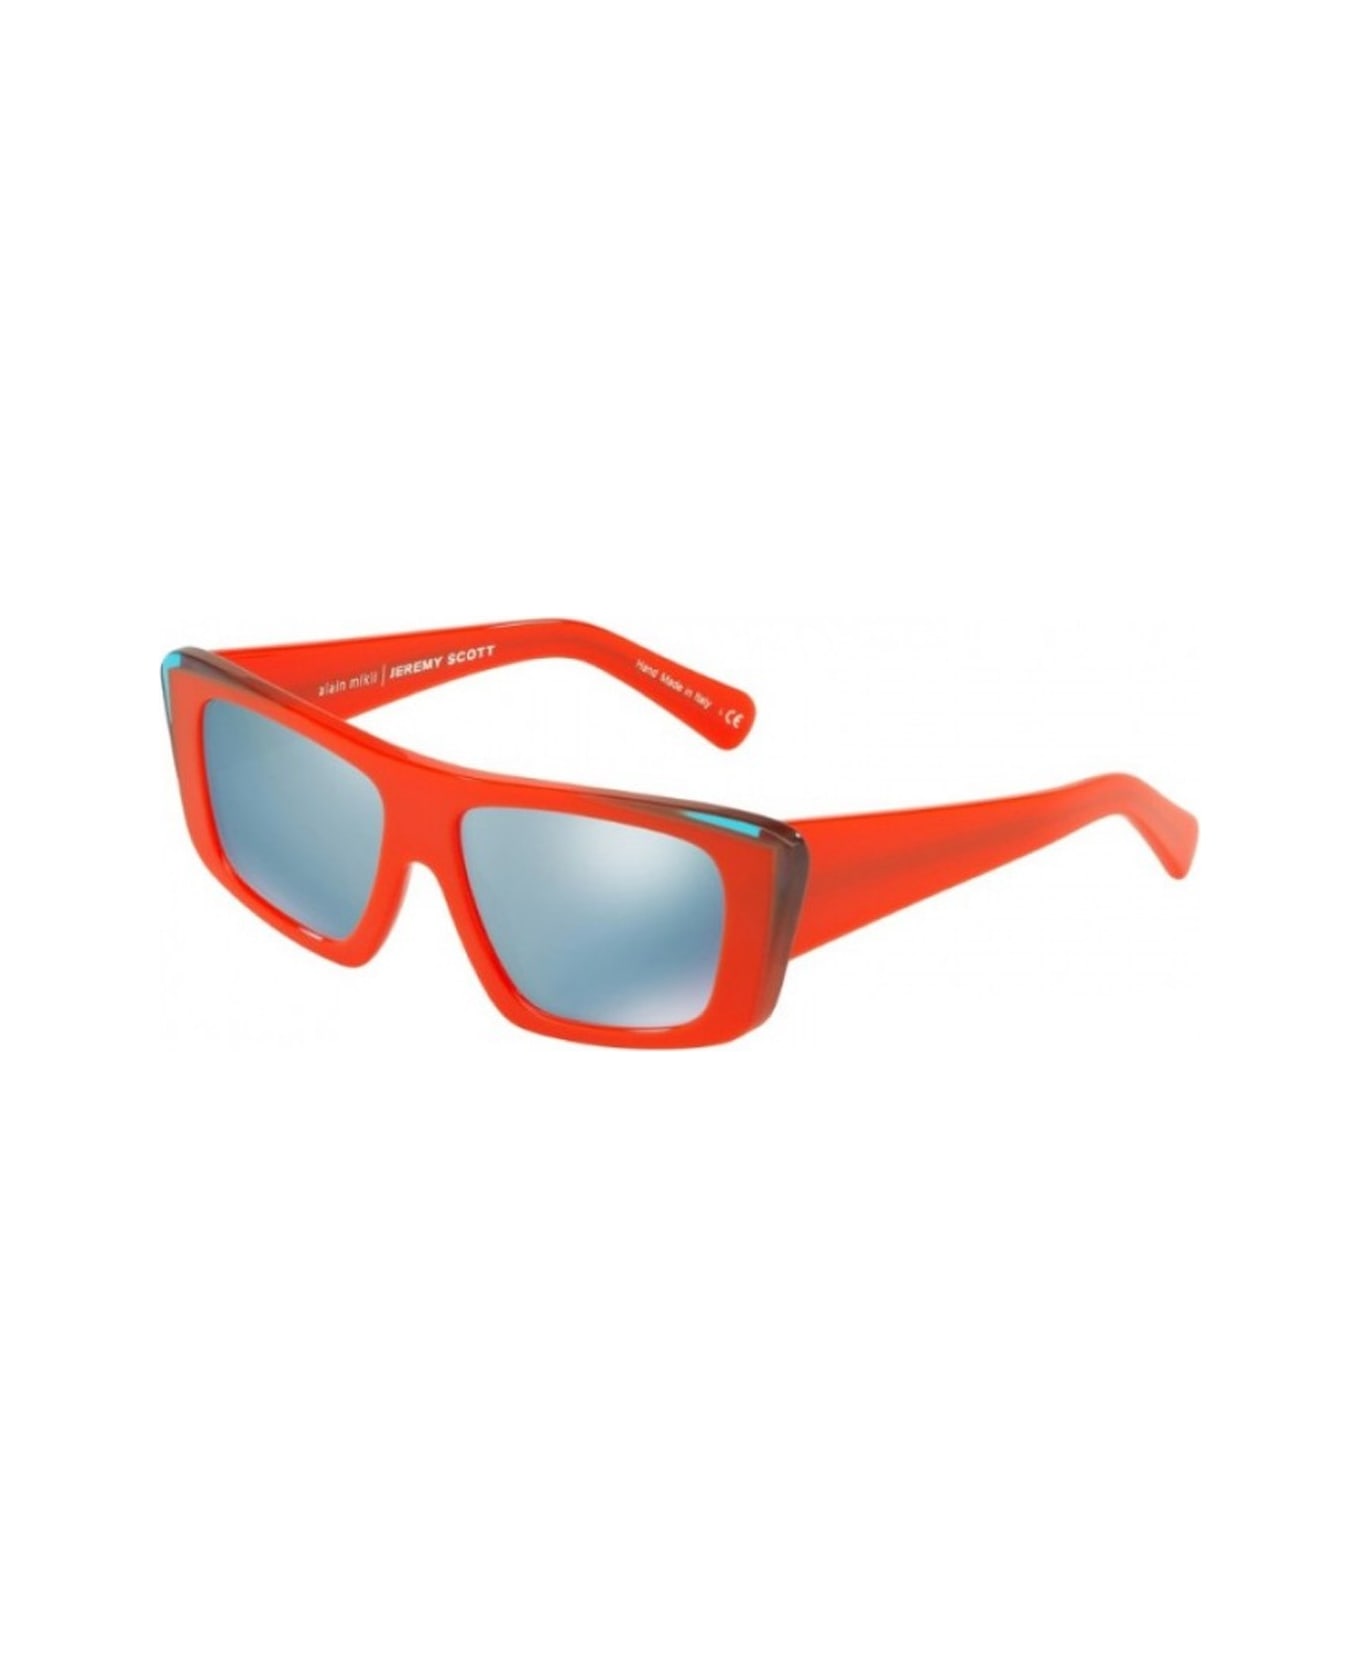 Alain Mikli A05029 Special Edition Sunglasses - Arancione サングラス